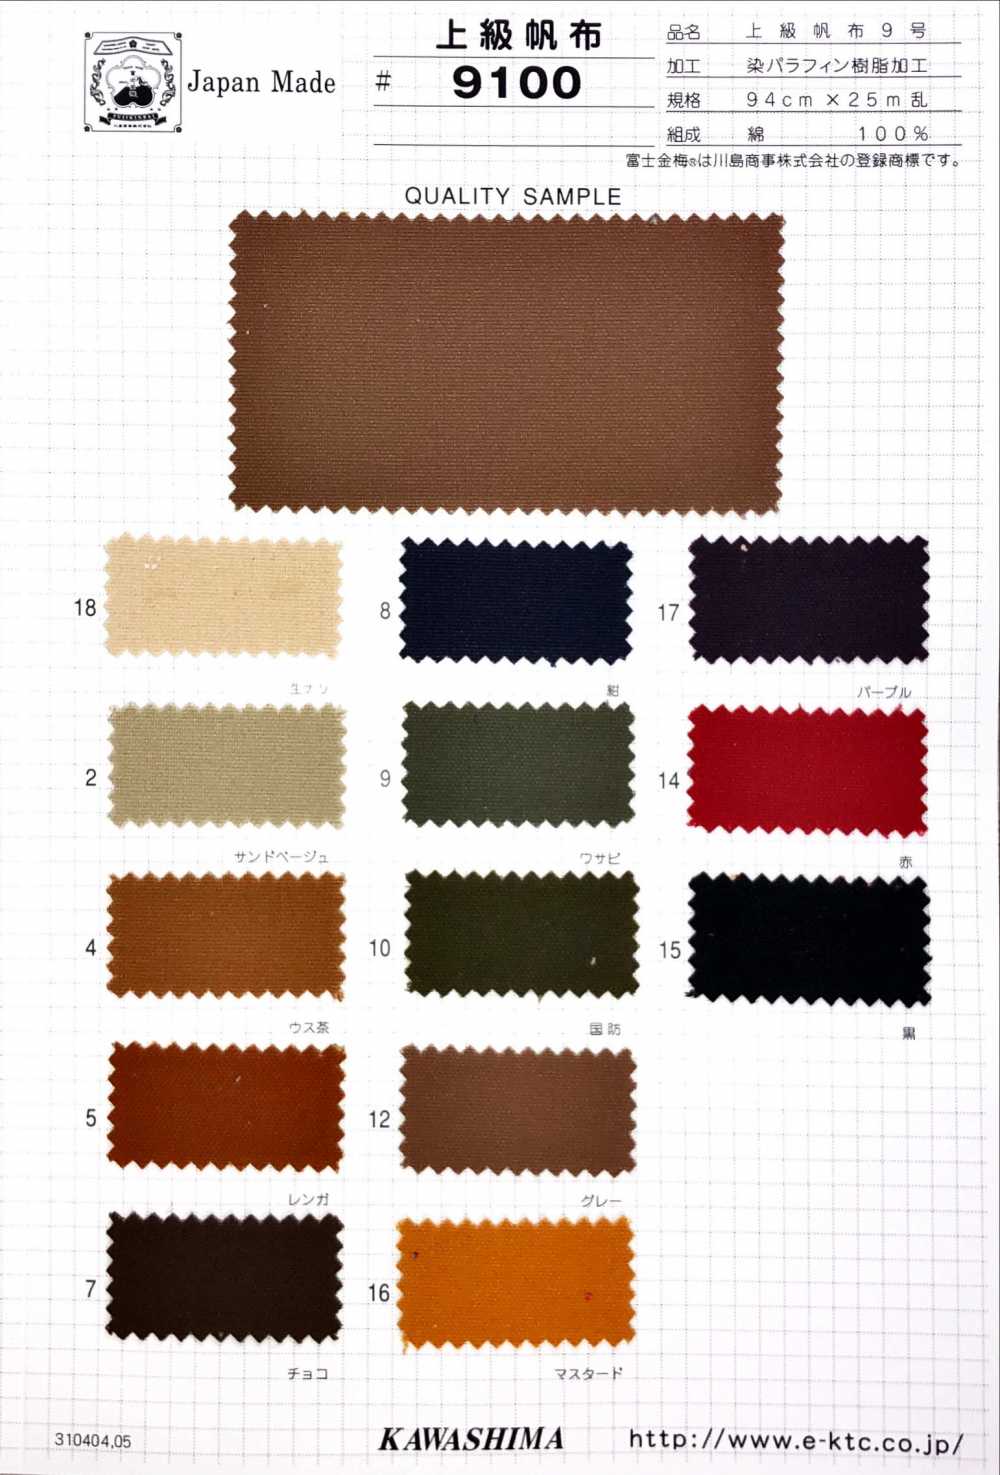 9100 Fuji Kinume Advanced Cotton Canvas No. 9 Paraffin Resin Processing[Textilgewebe] Fuji Gold Pflaume